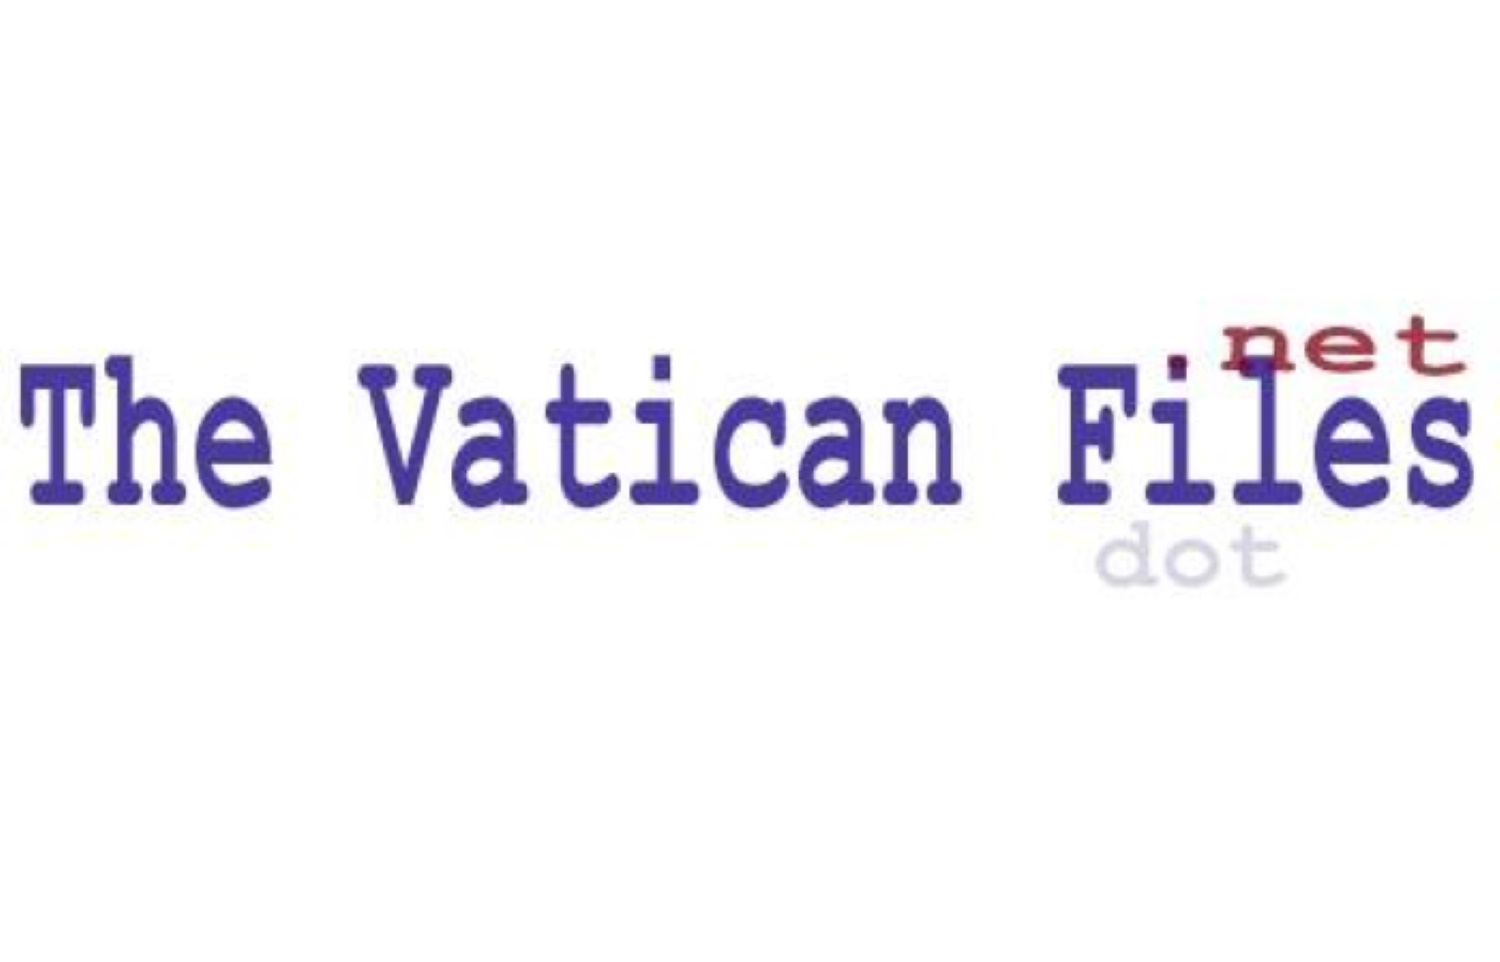 The Vatican Files.net - Home-   THE VATICAN FILES.NET  -      Storia - Testi - Documenti    